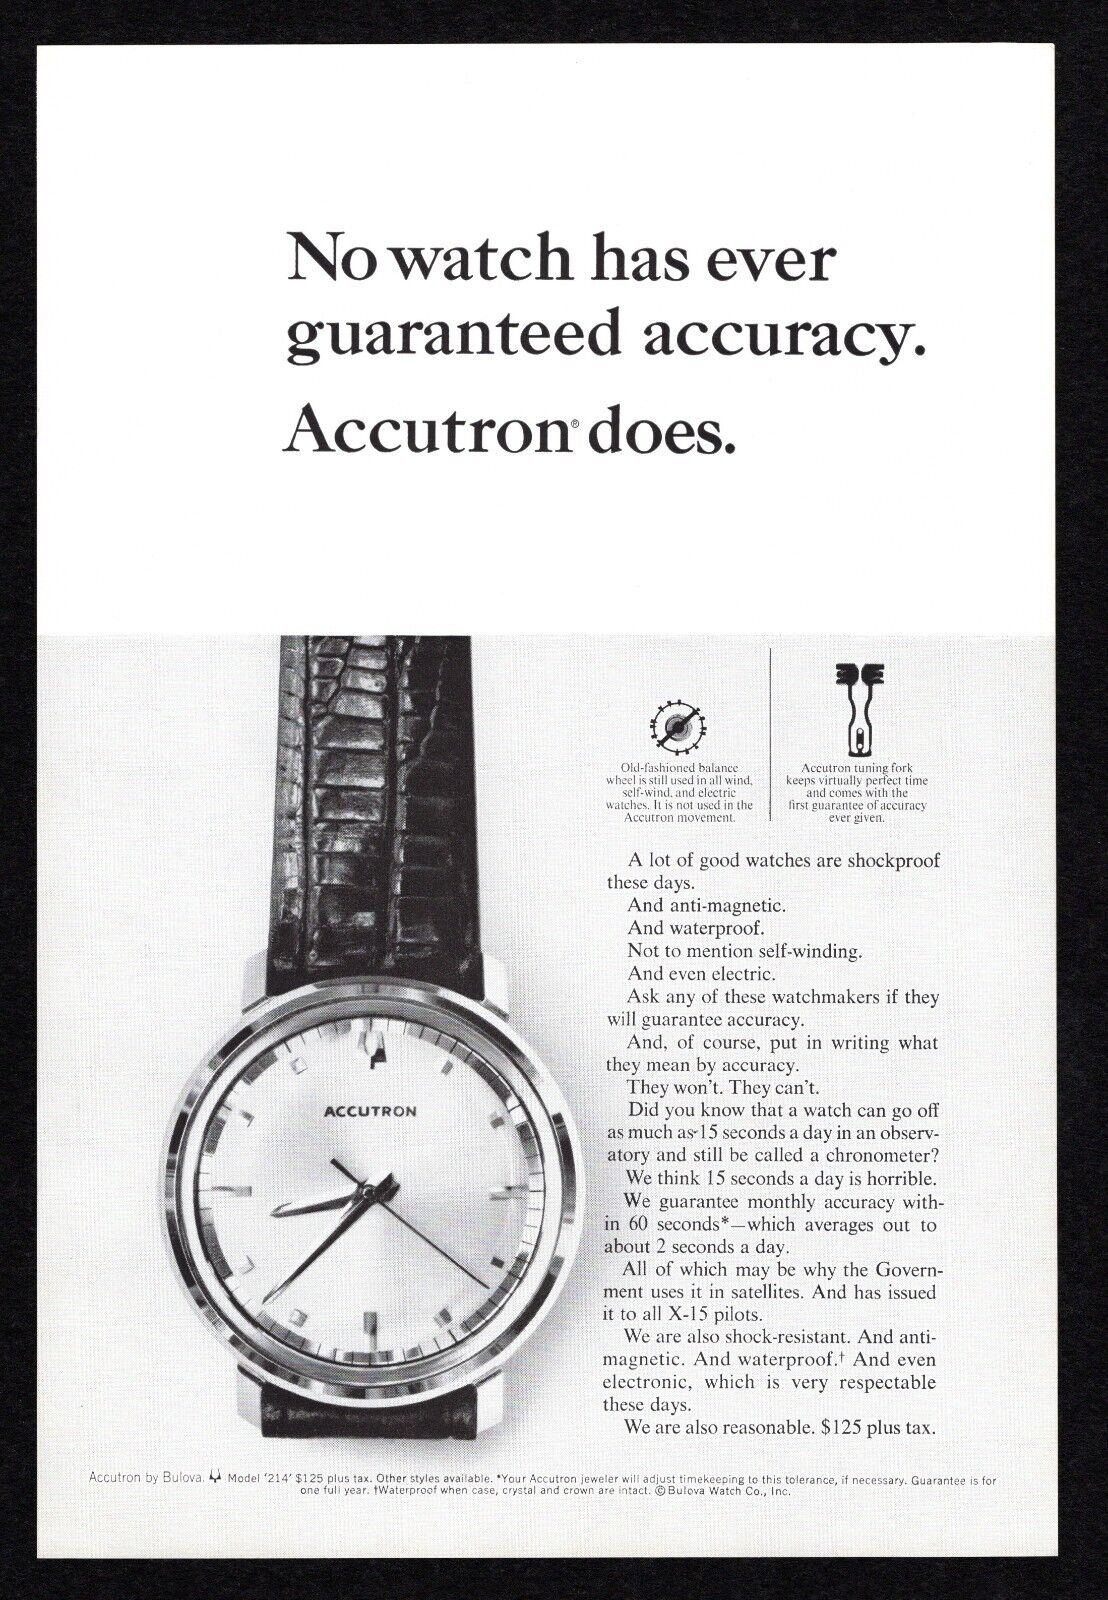 1964 Bulova Accutron Watch Guaranteed Accuracy 2 Second/Day Tuning Fork Print Ad